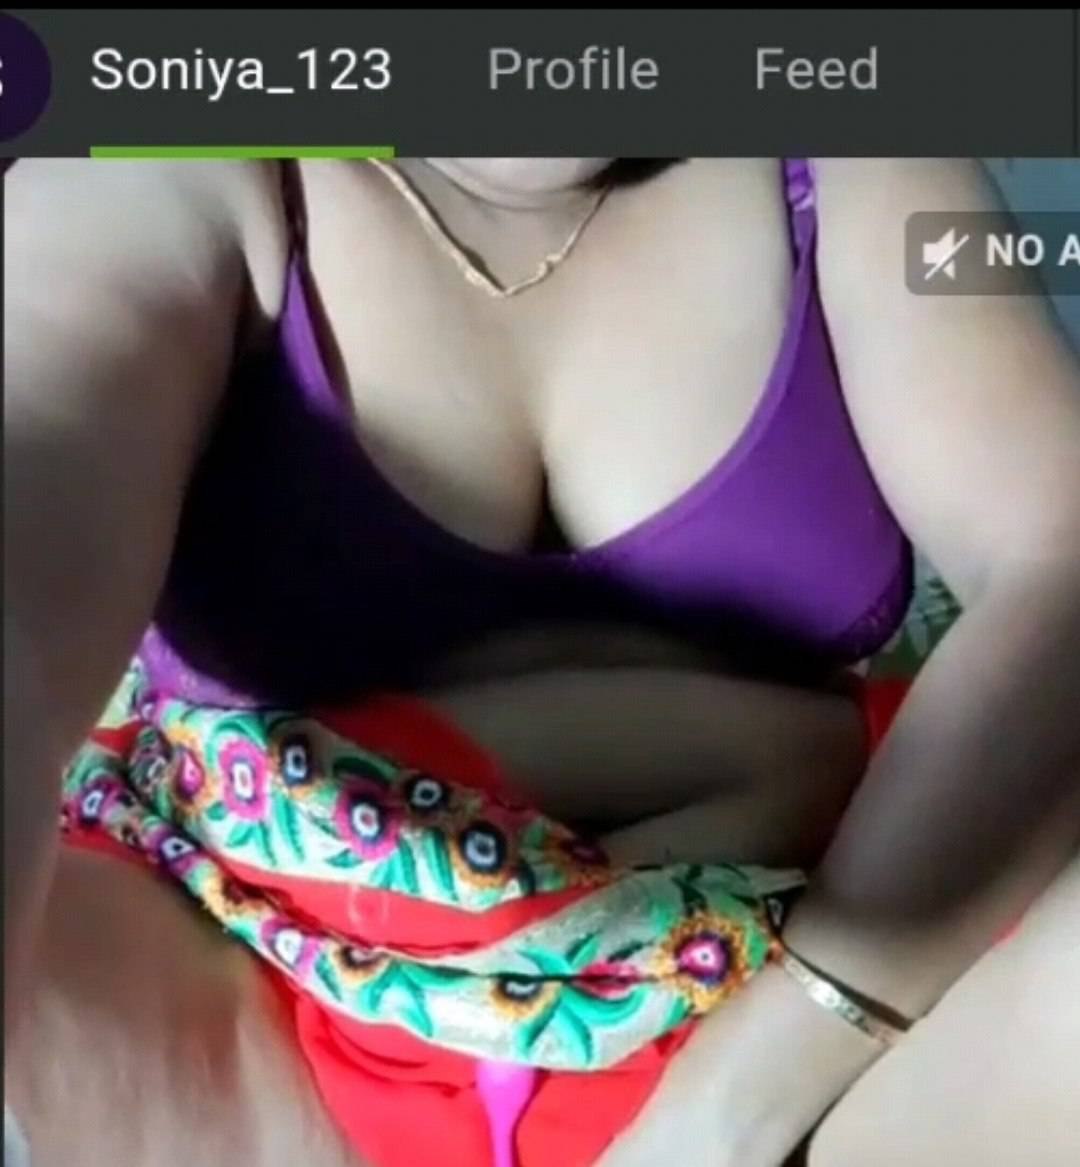 Soniya